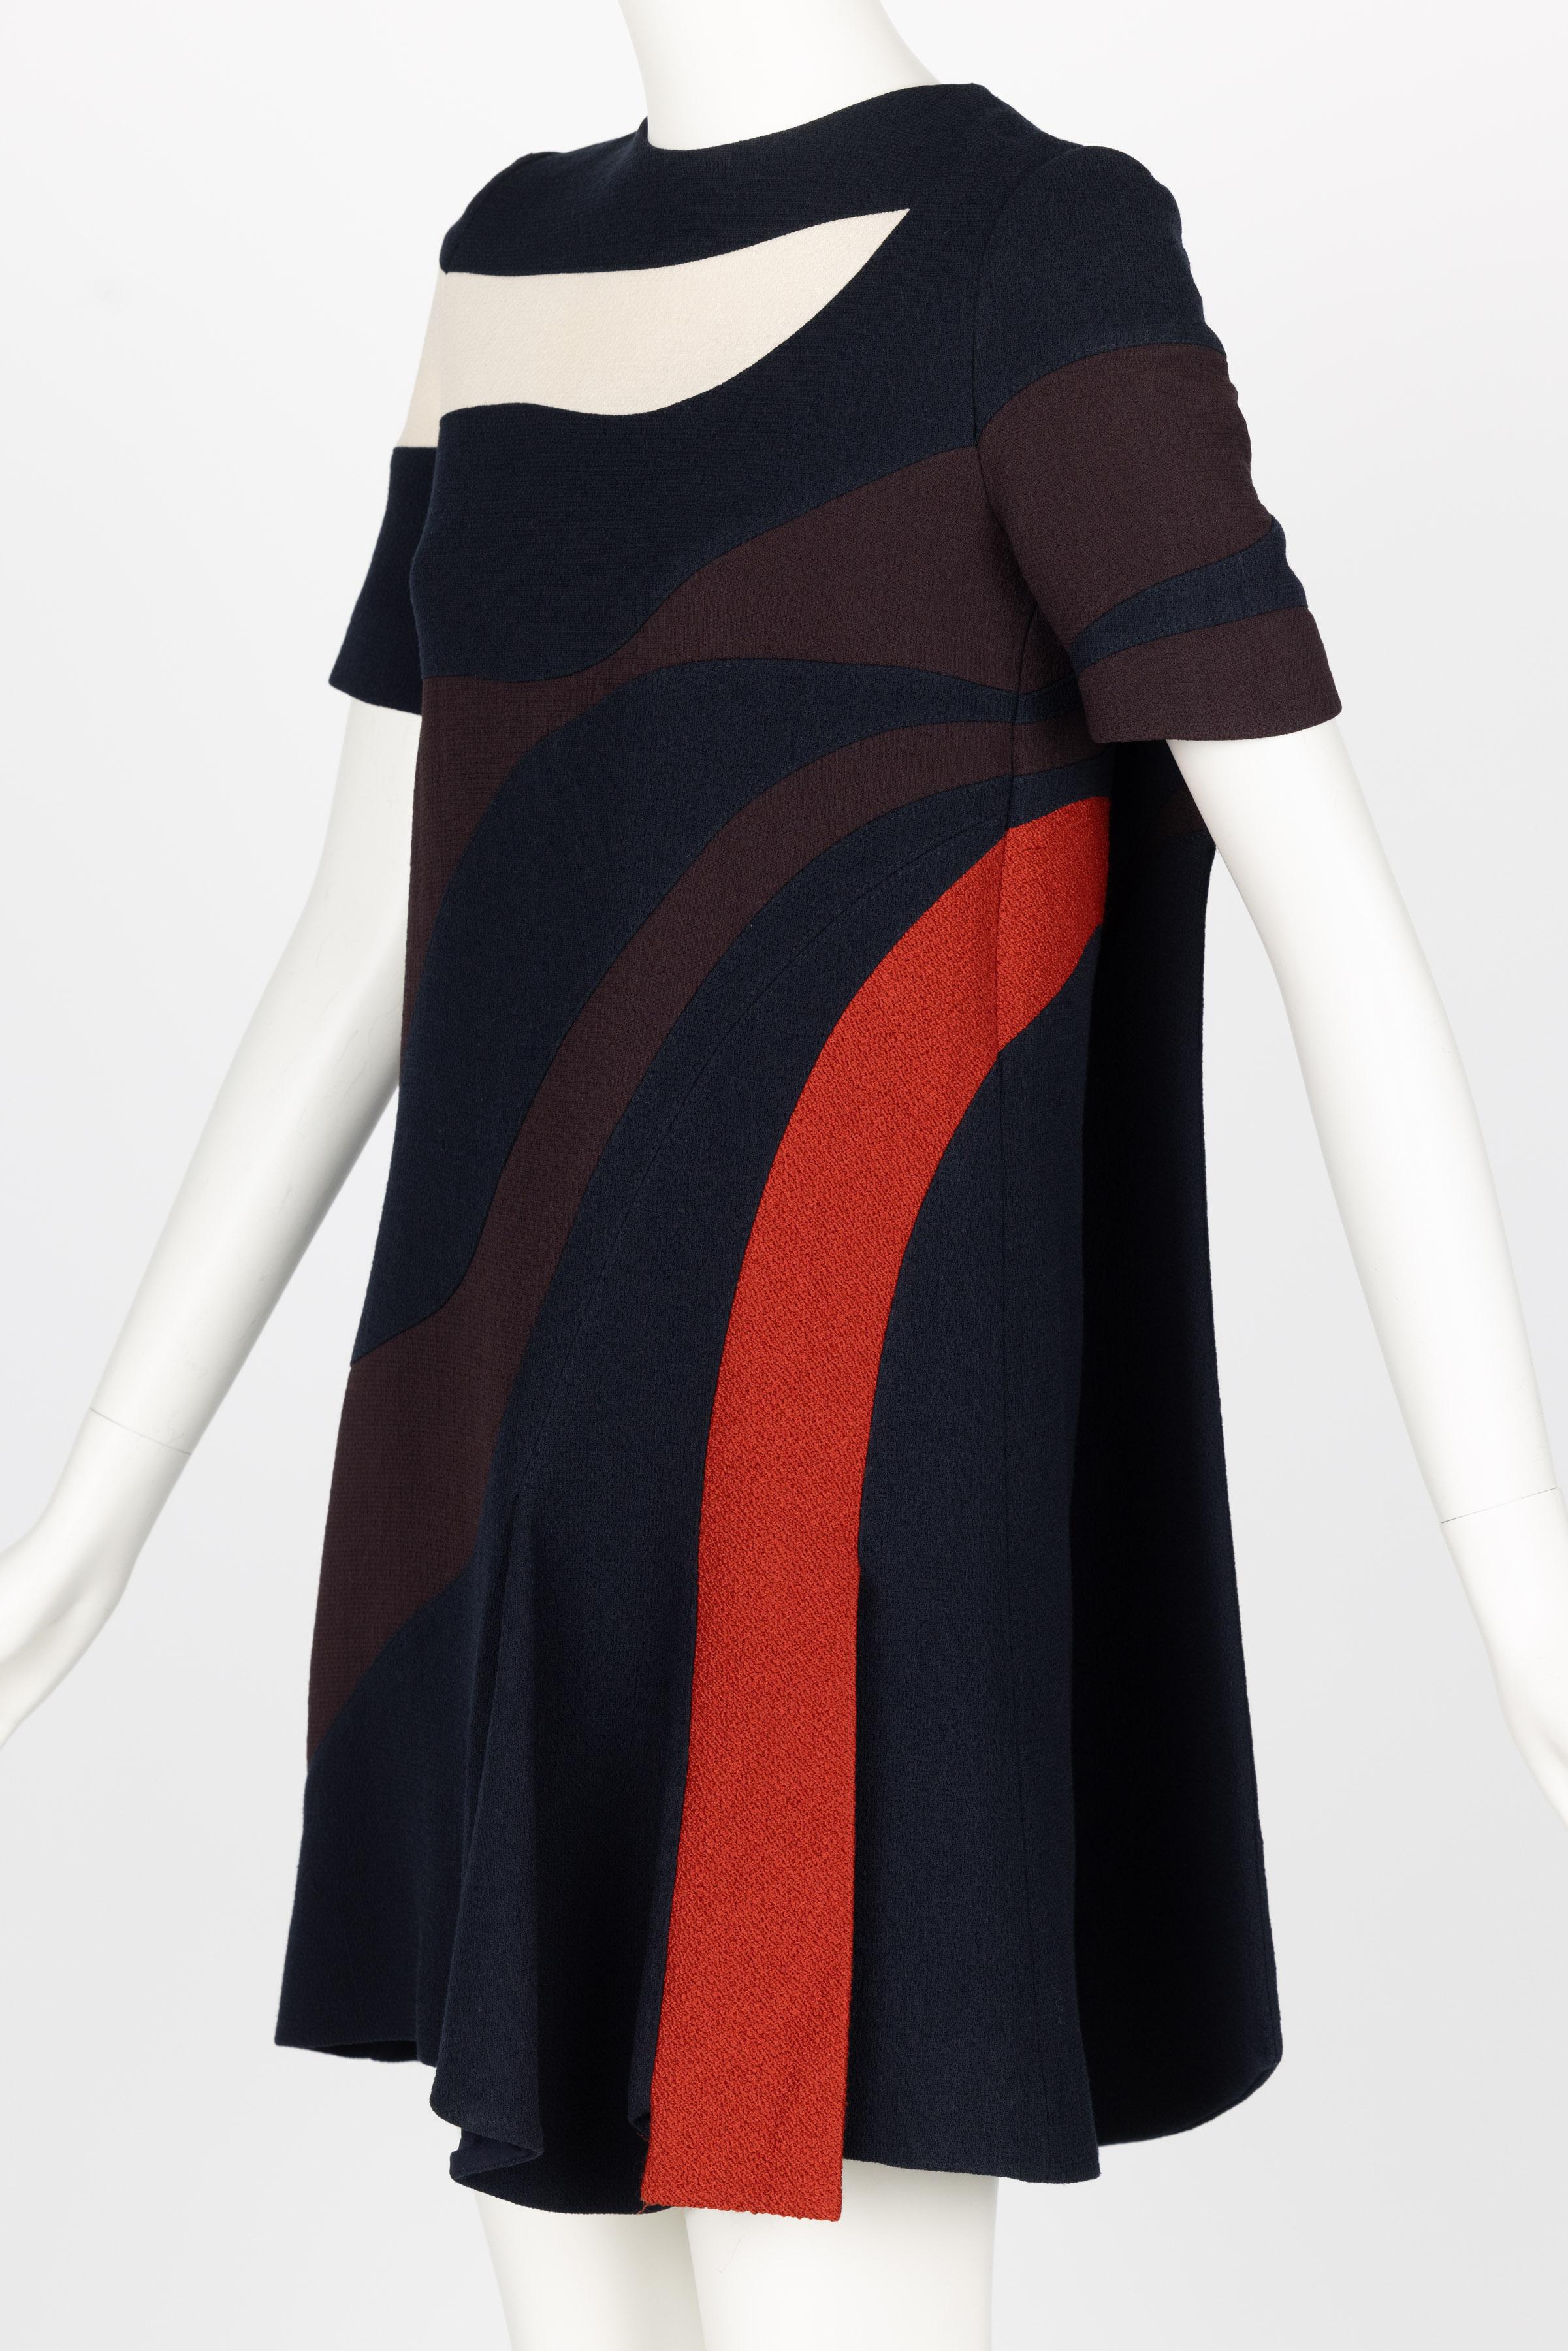 Women's Christian Dior Raf Simmons Abstract Stripe Dress Runway Fall 2015 